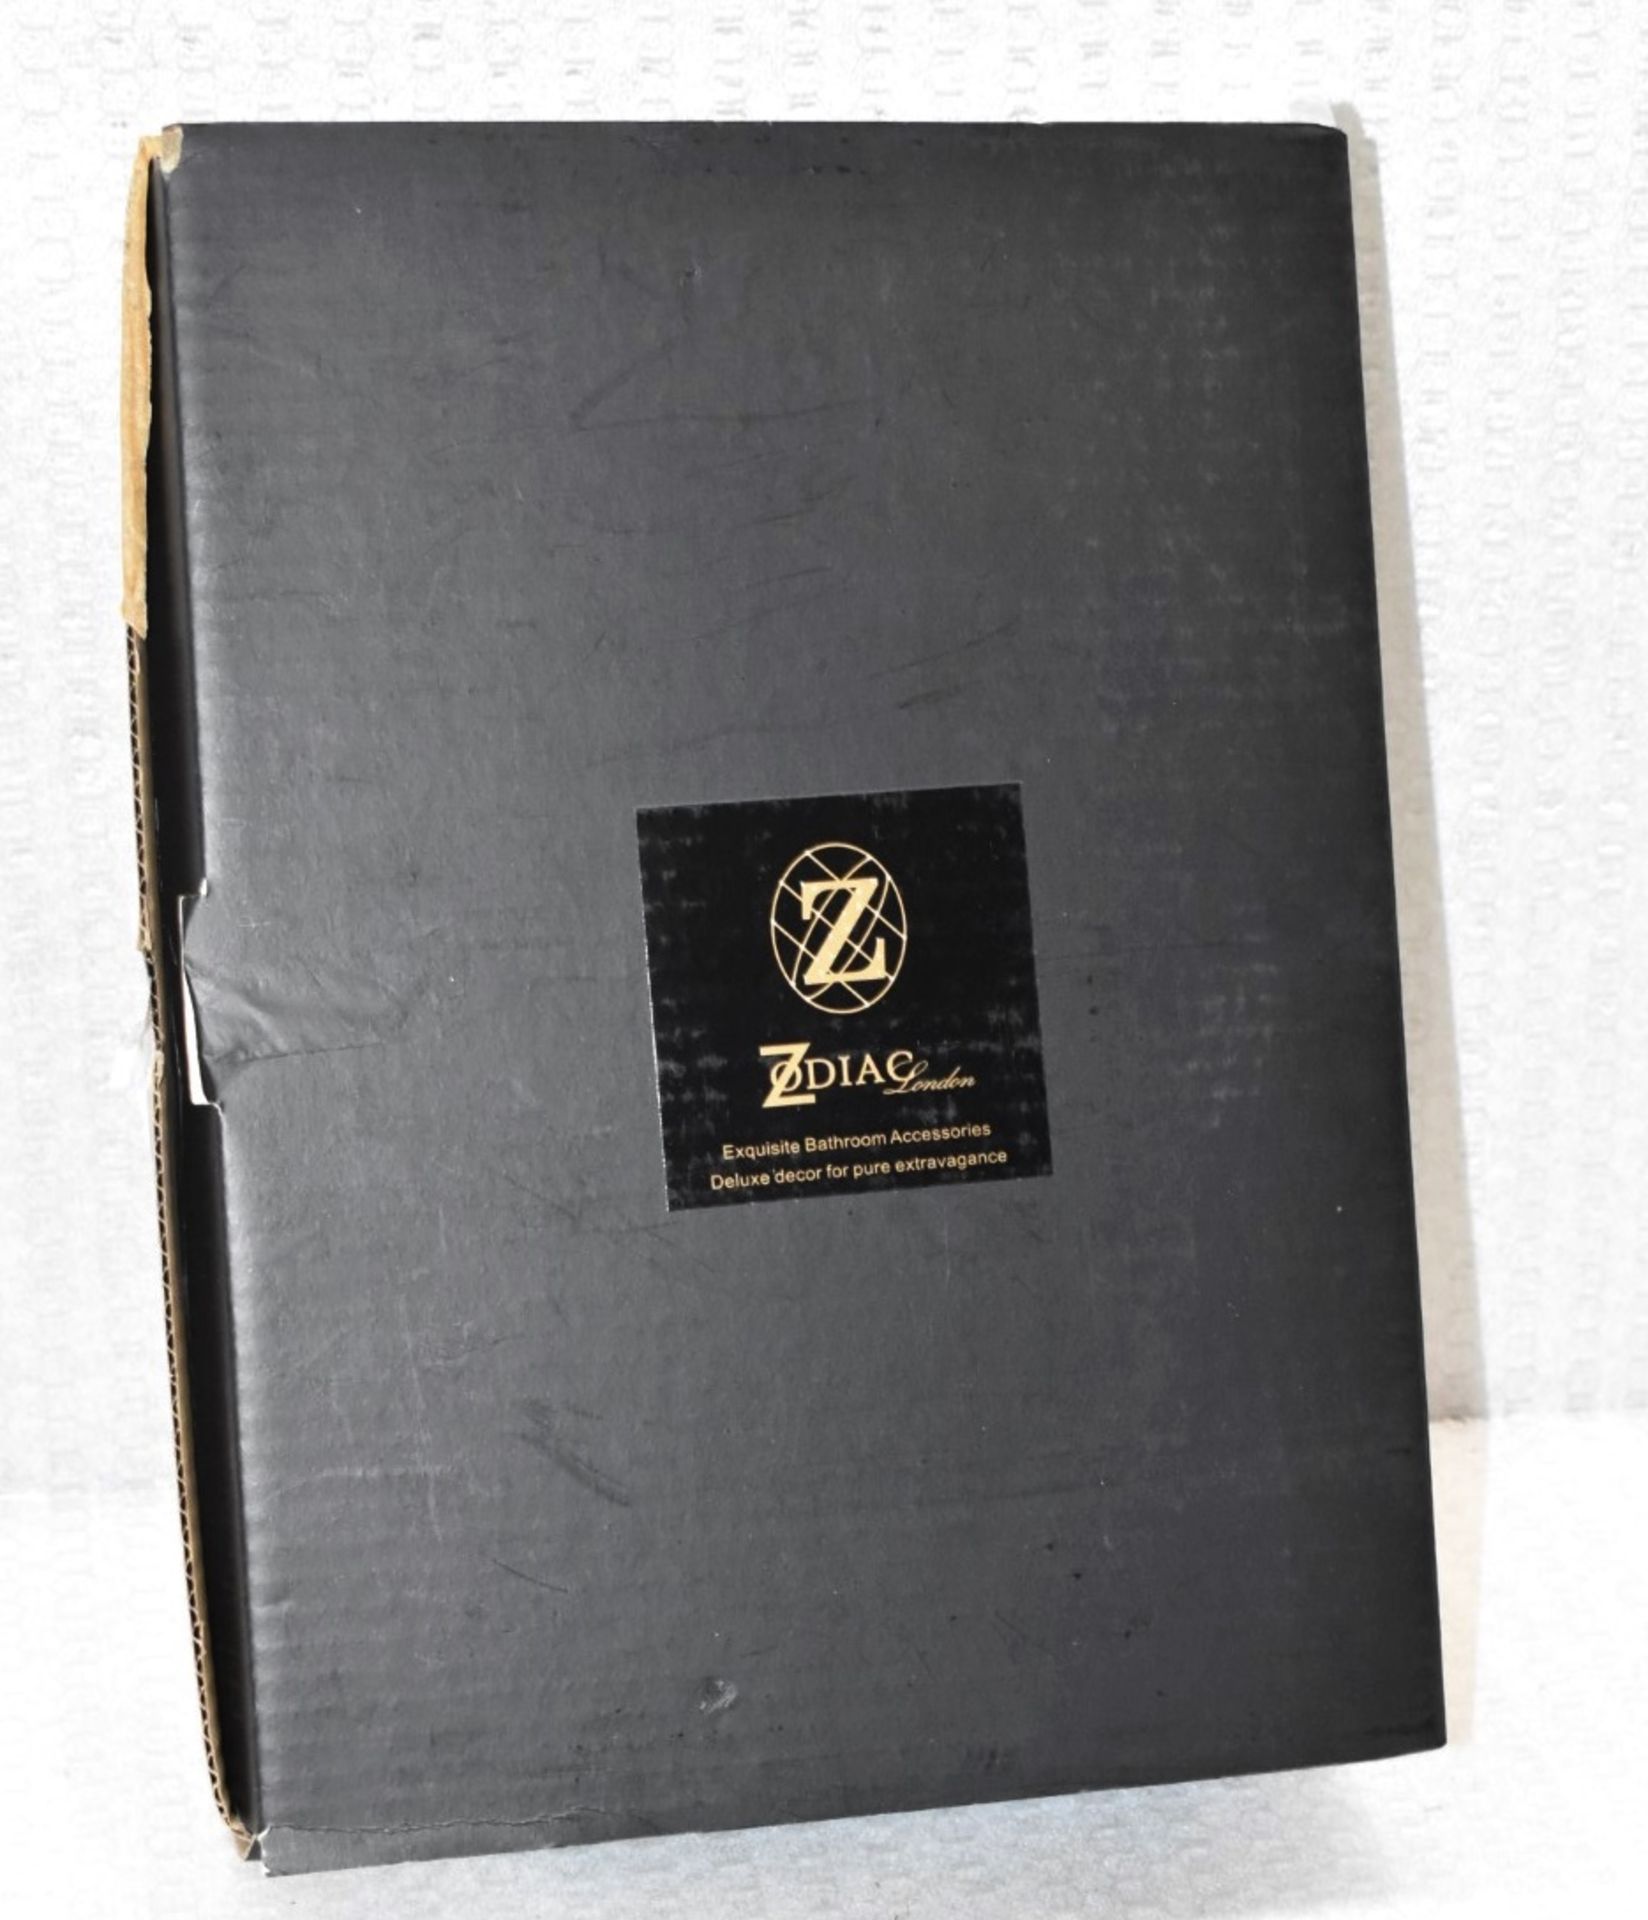 1 x ZODIAC Luxury Chrome Trimmed Glass Tray - Original Price £300.00 - Boxed - Read Full Description - Image 5 of 6